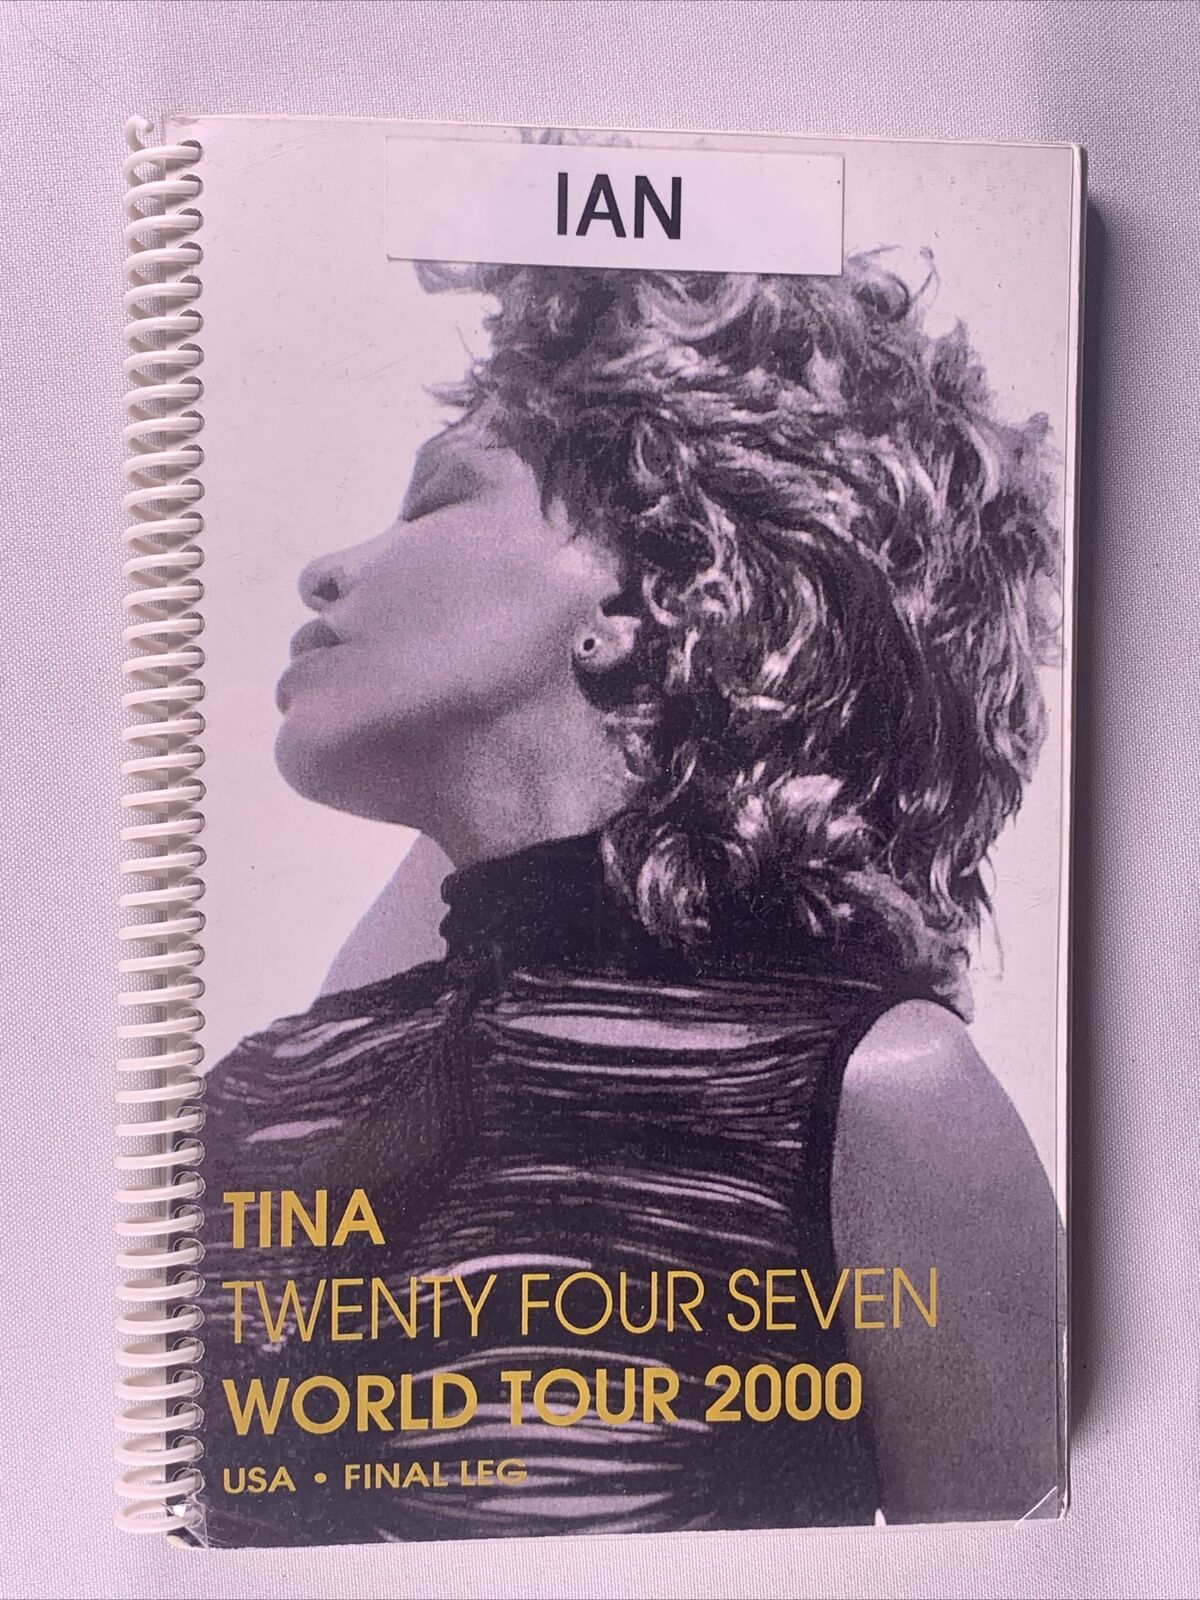 Tina Turner Itinerary Original Vintage Twenty Four Seven World Tour USA 2000 #2